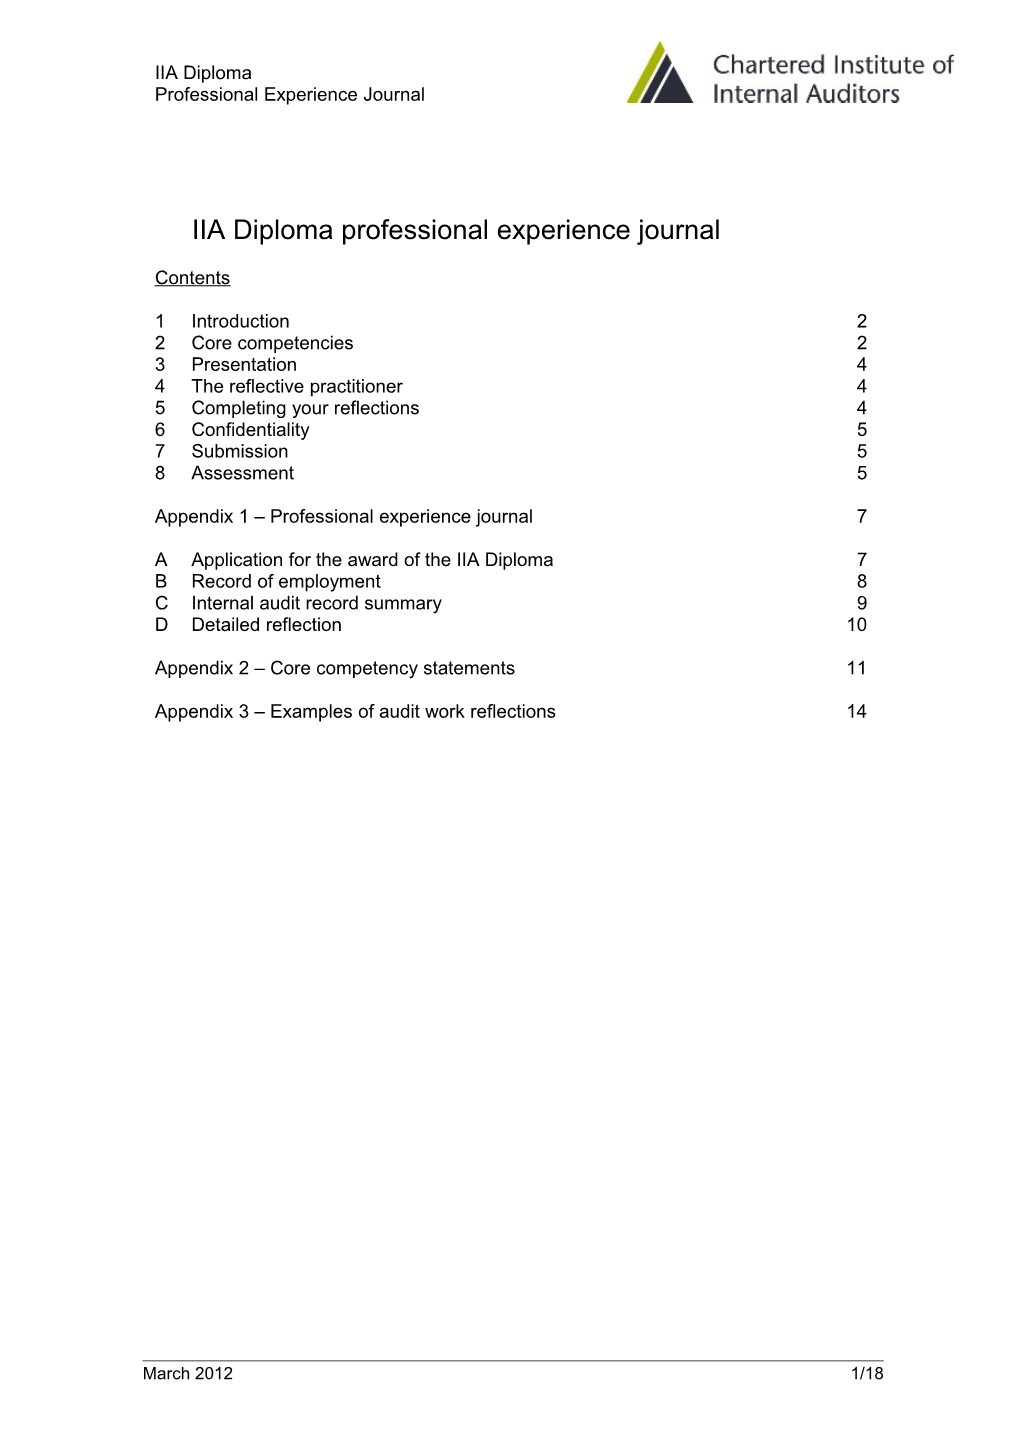 IIA Diploma Professional Experience Journal